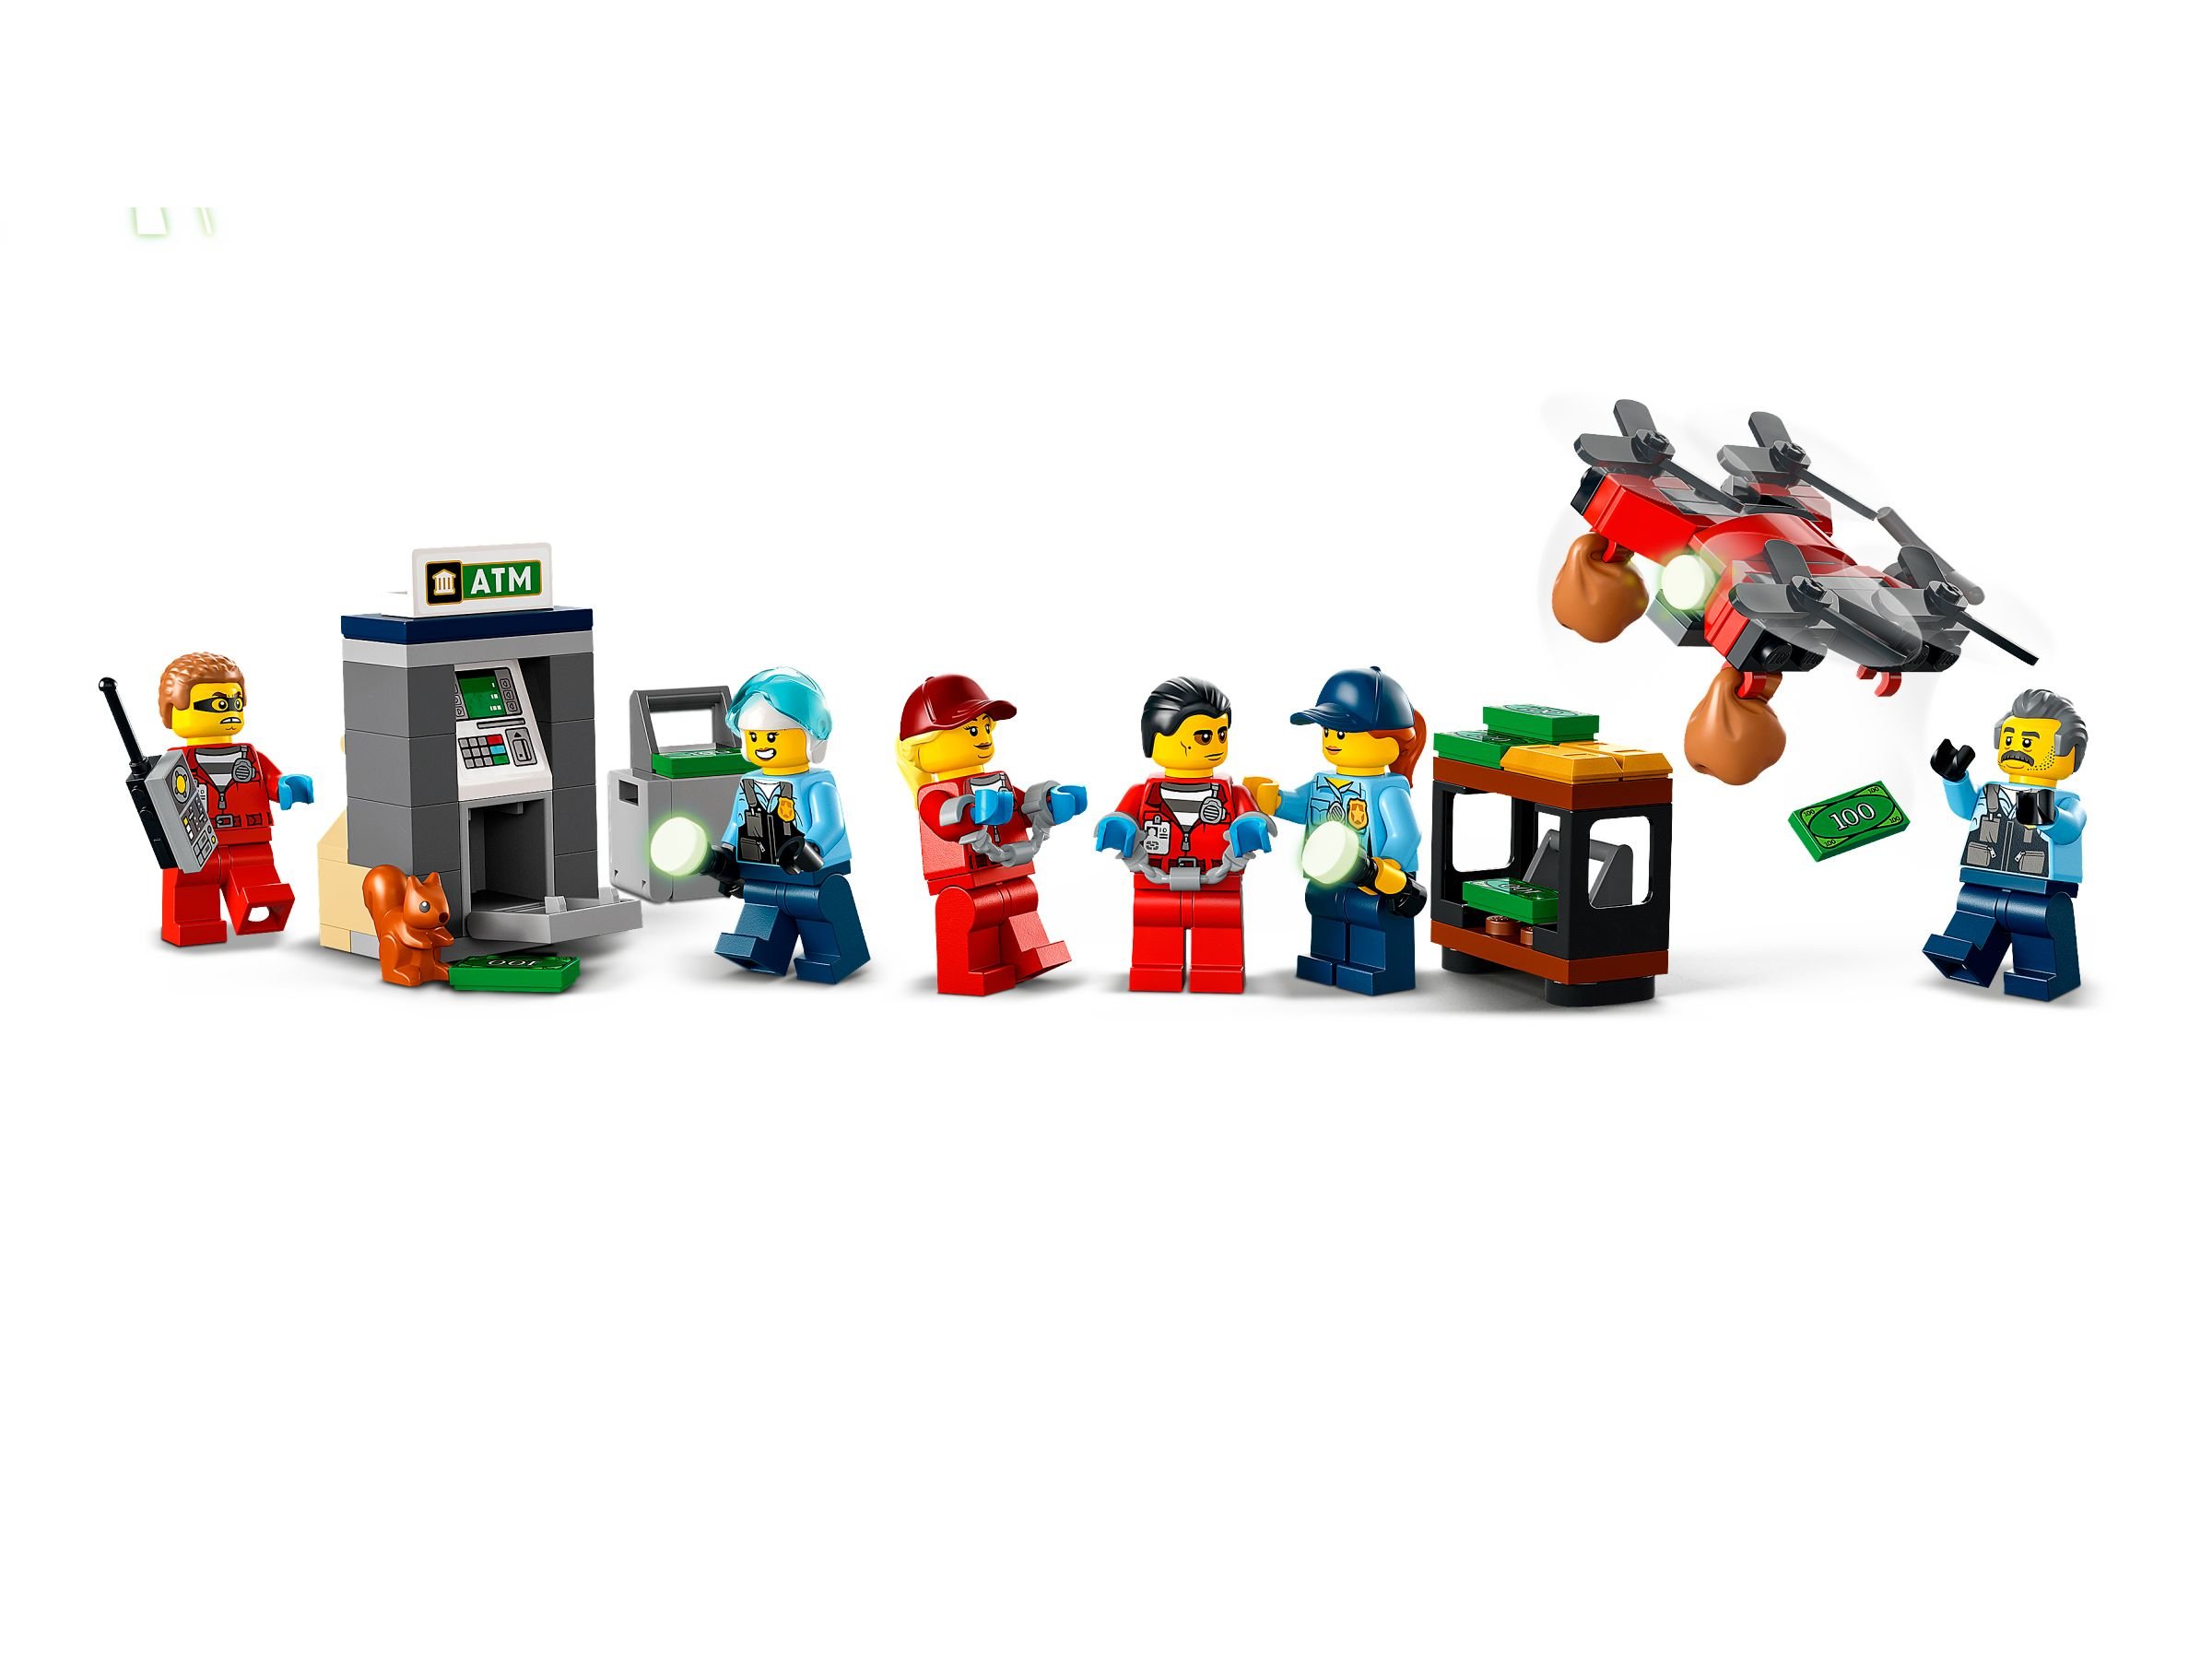 LEGO City 60317 Banküberfall mit Verfolgungsjagd LEGO_60317_alt3.jpg